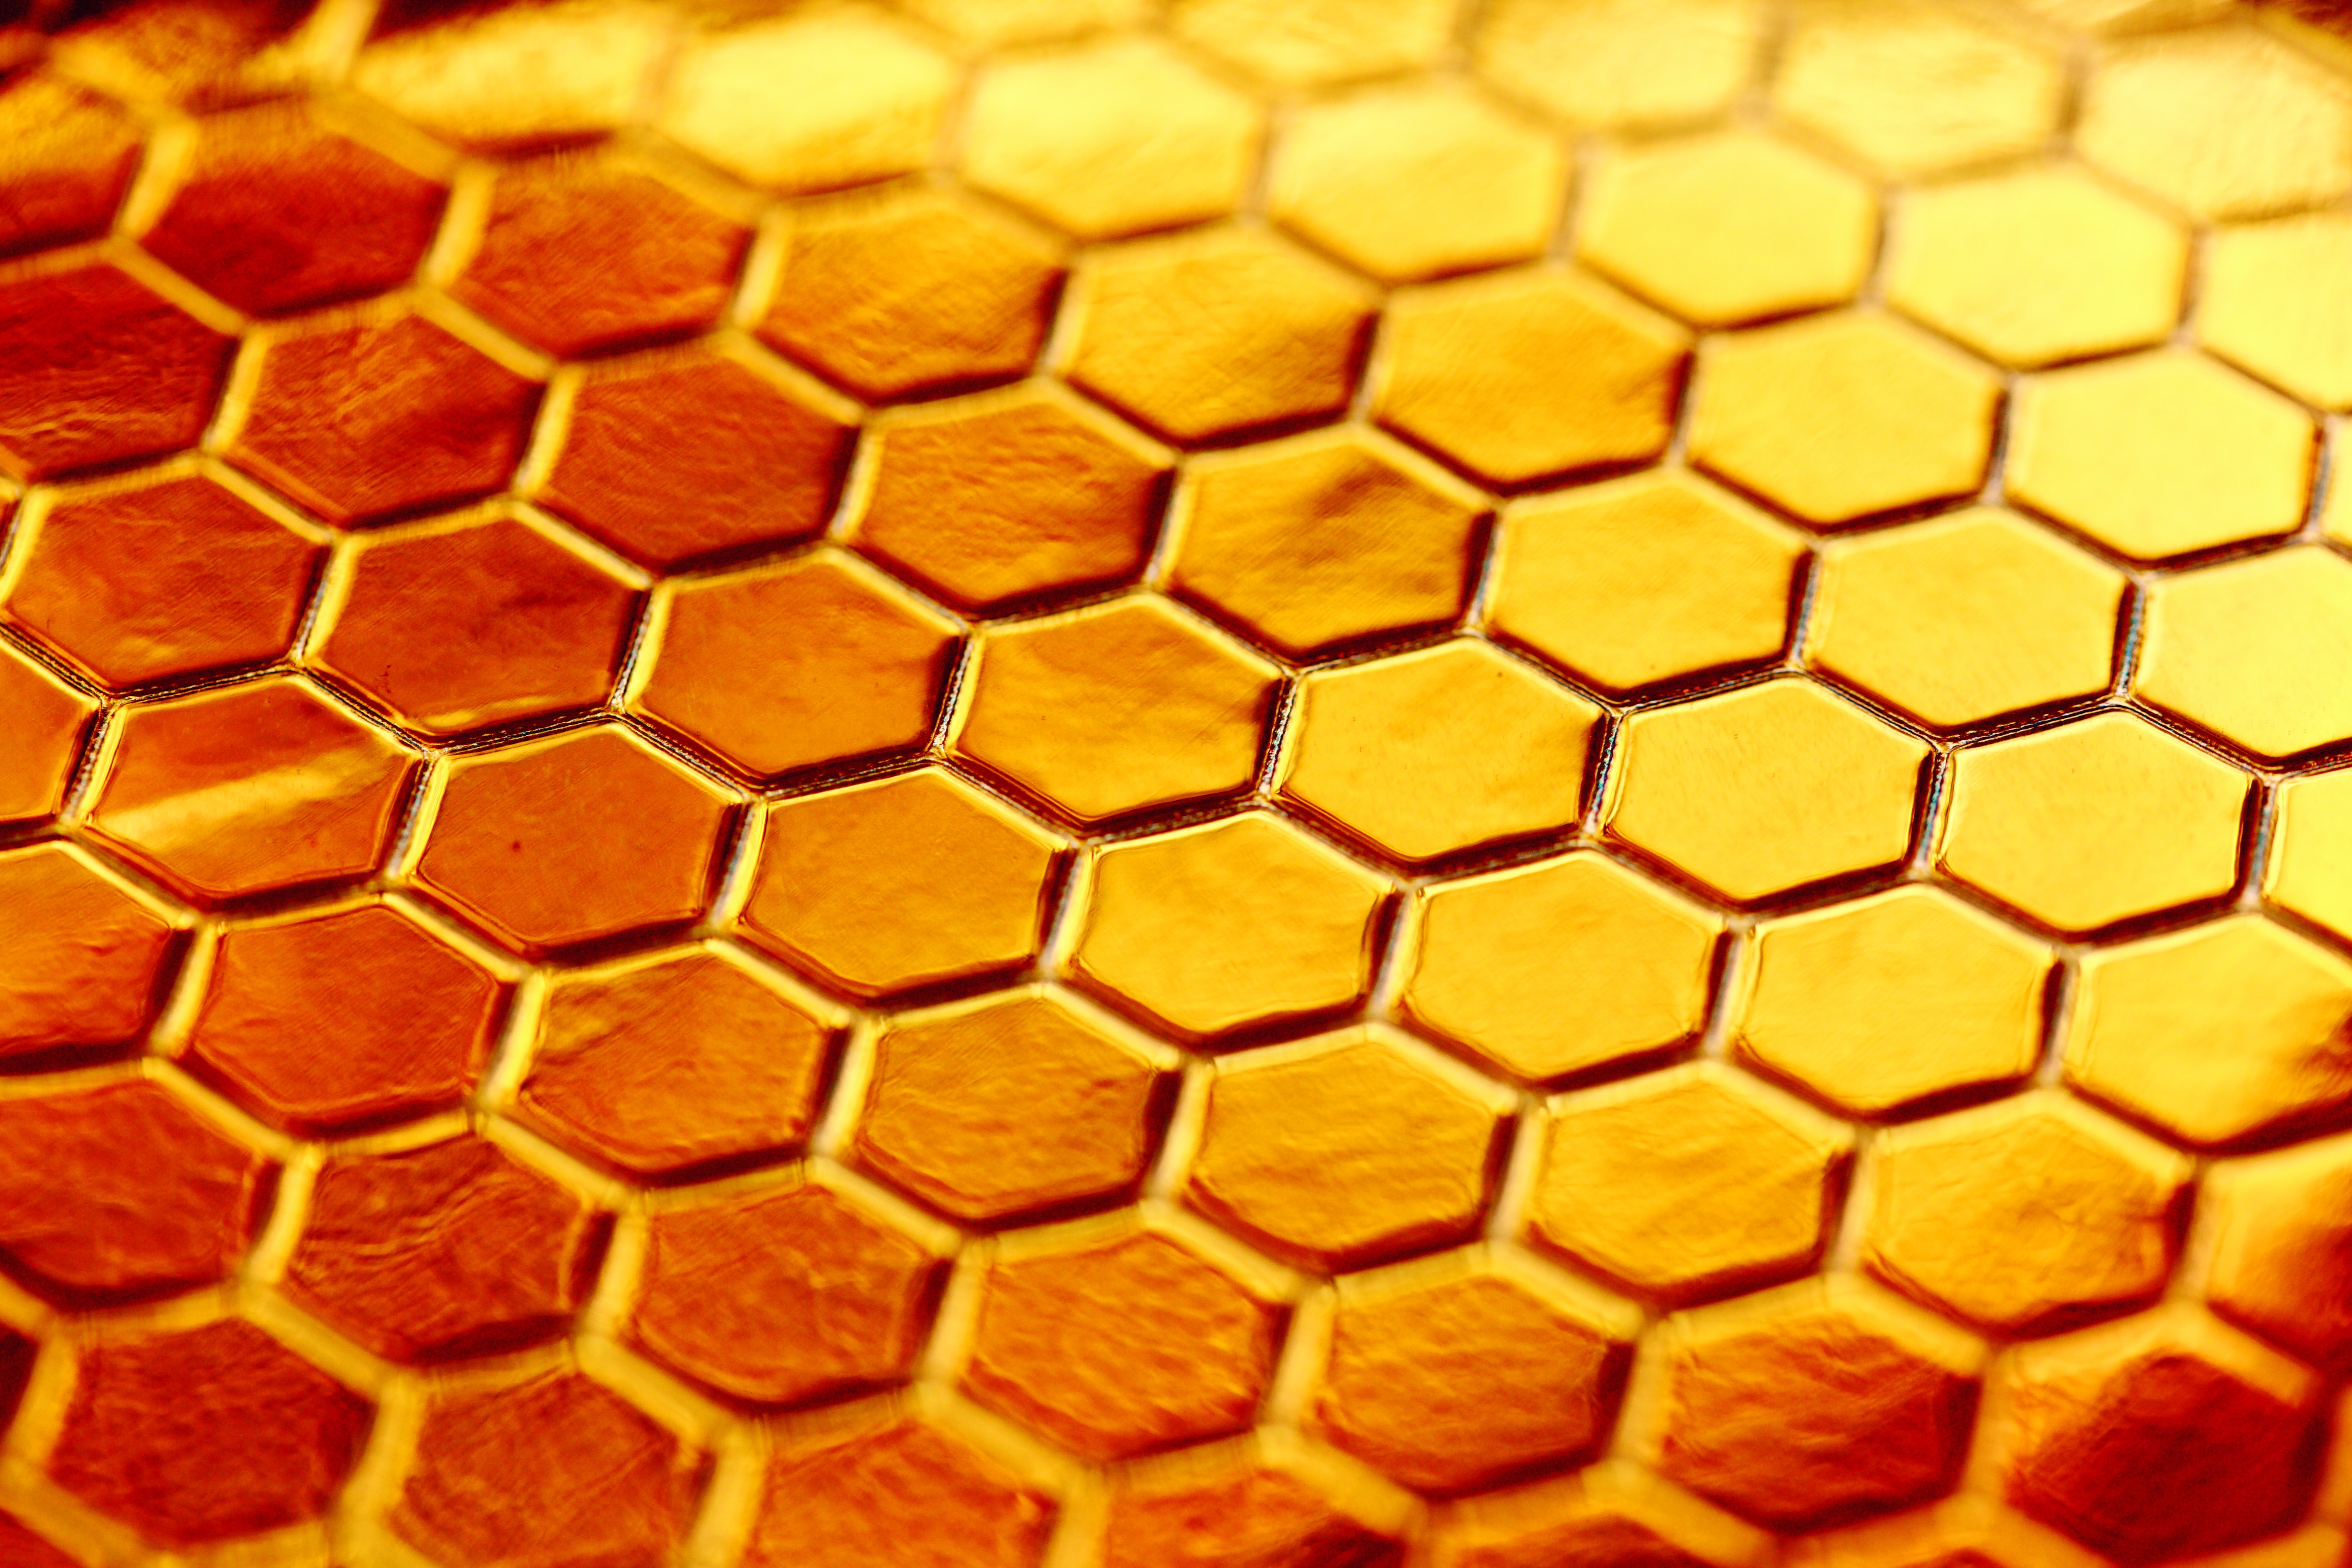 Shiny honey in hexagons